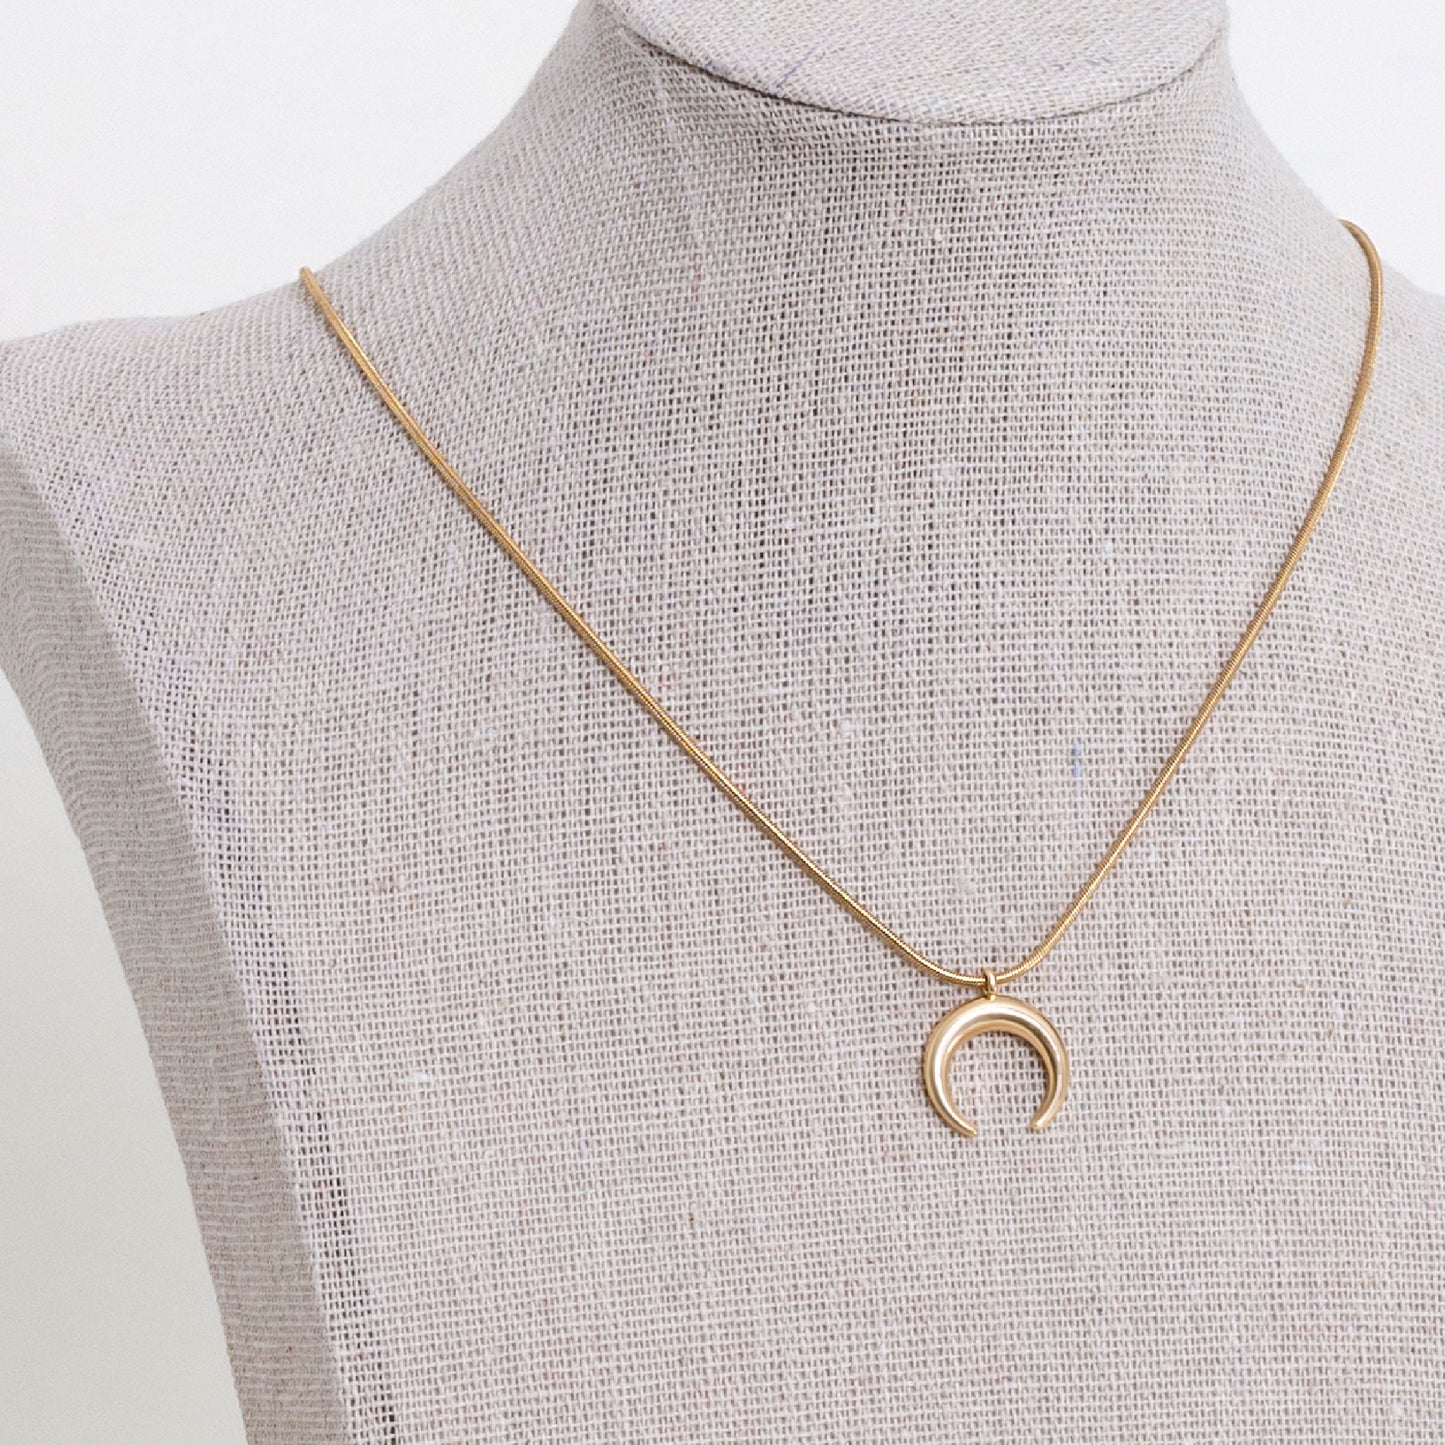 Tsuki Crescent Moon Necklace